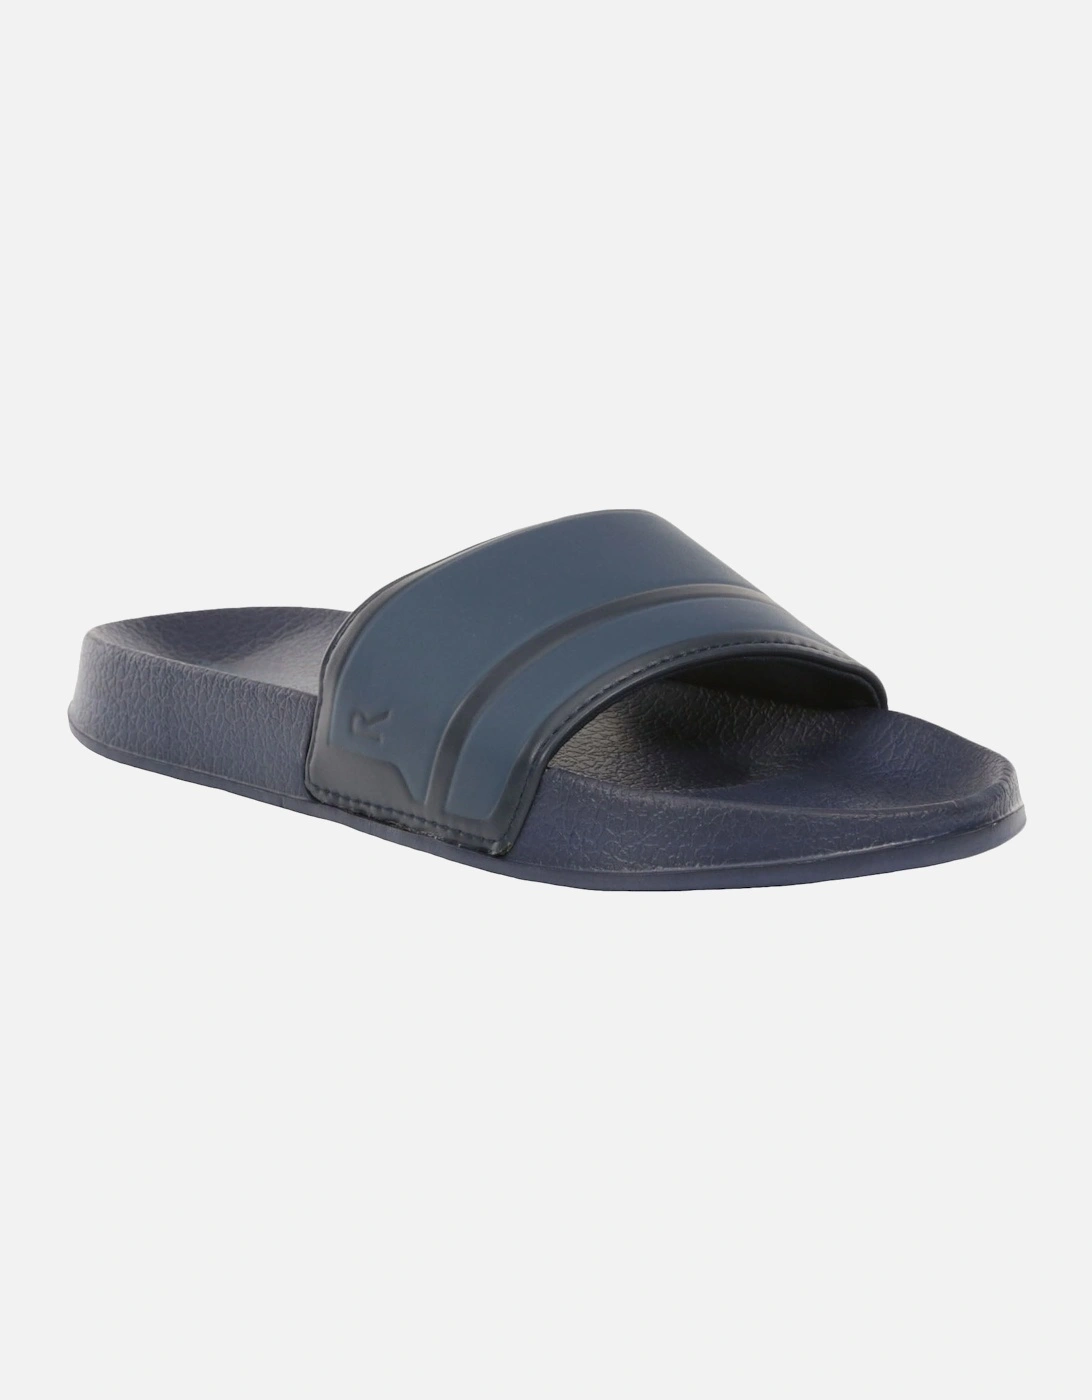 Mens Shift Summer Sandals Sliders